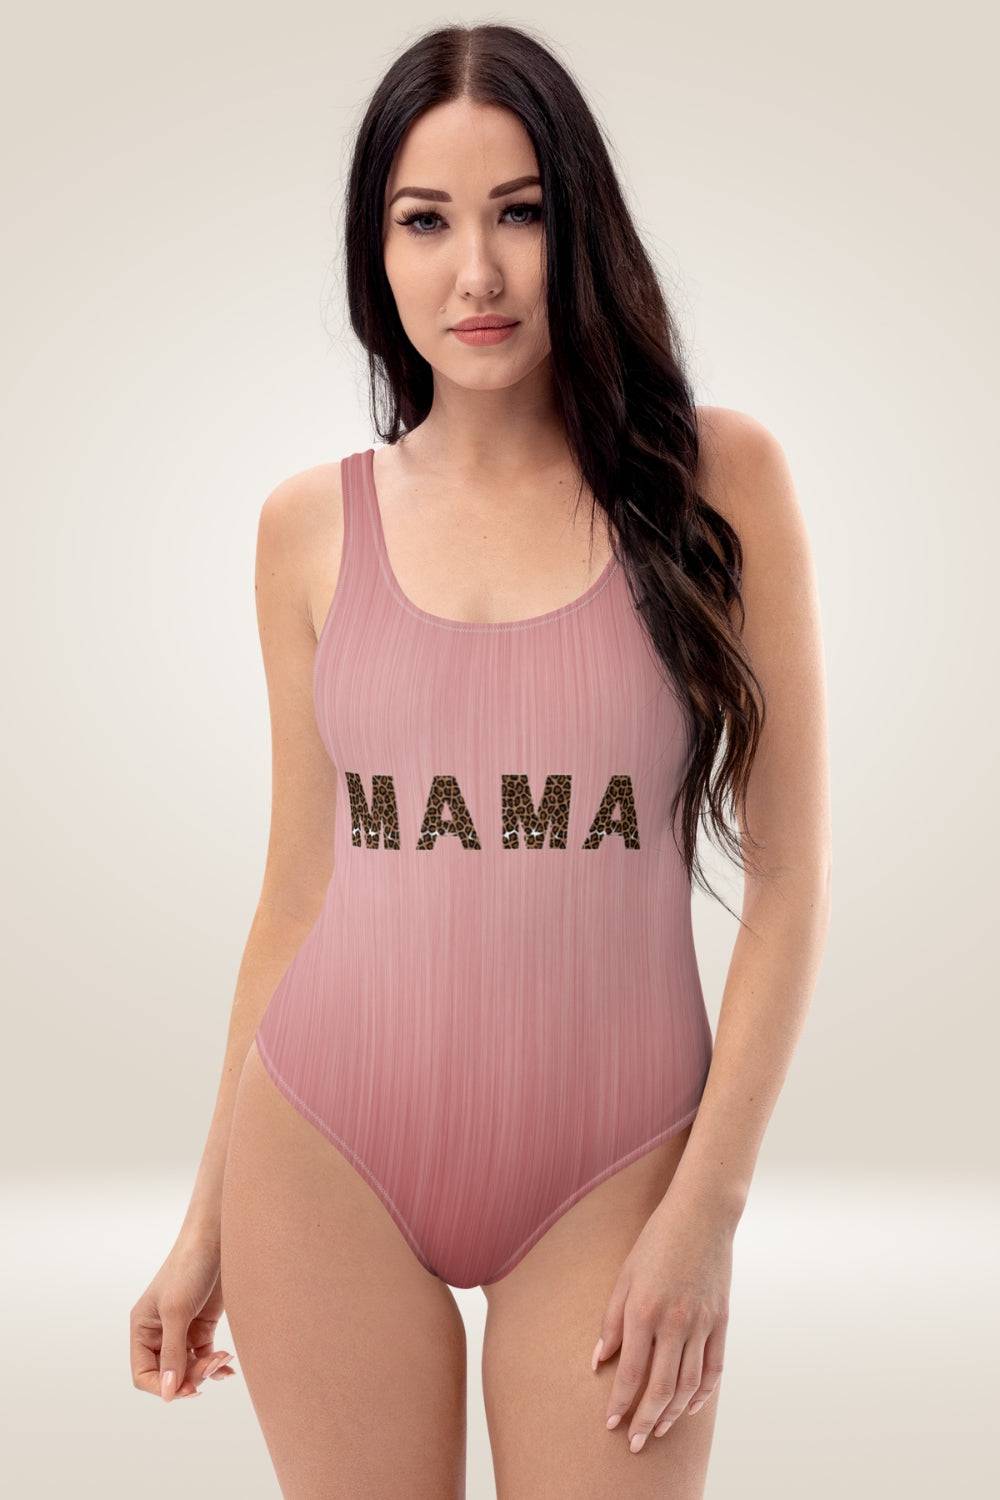 Leopard Print "Mama" Blush Pink One Piece Swimsuit - TGC Boutique - One Piece Swimsuit